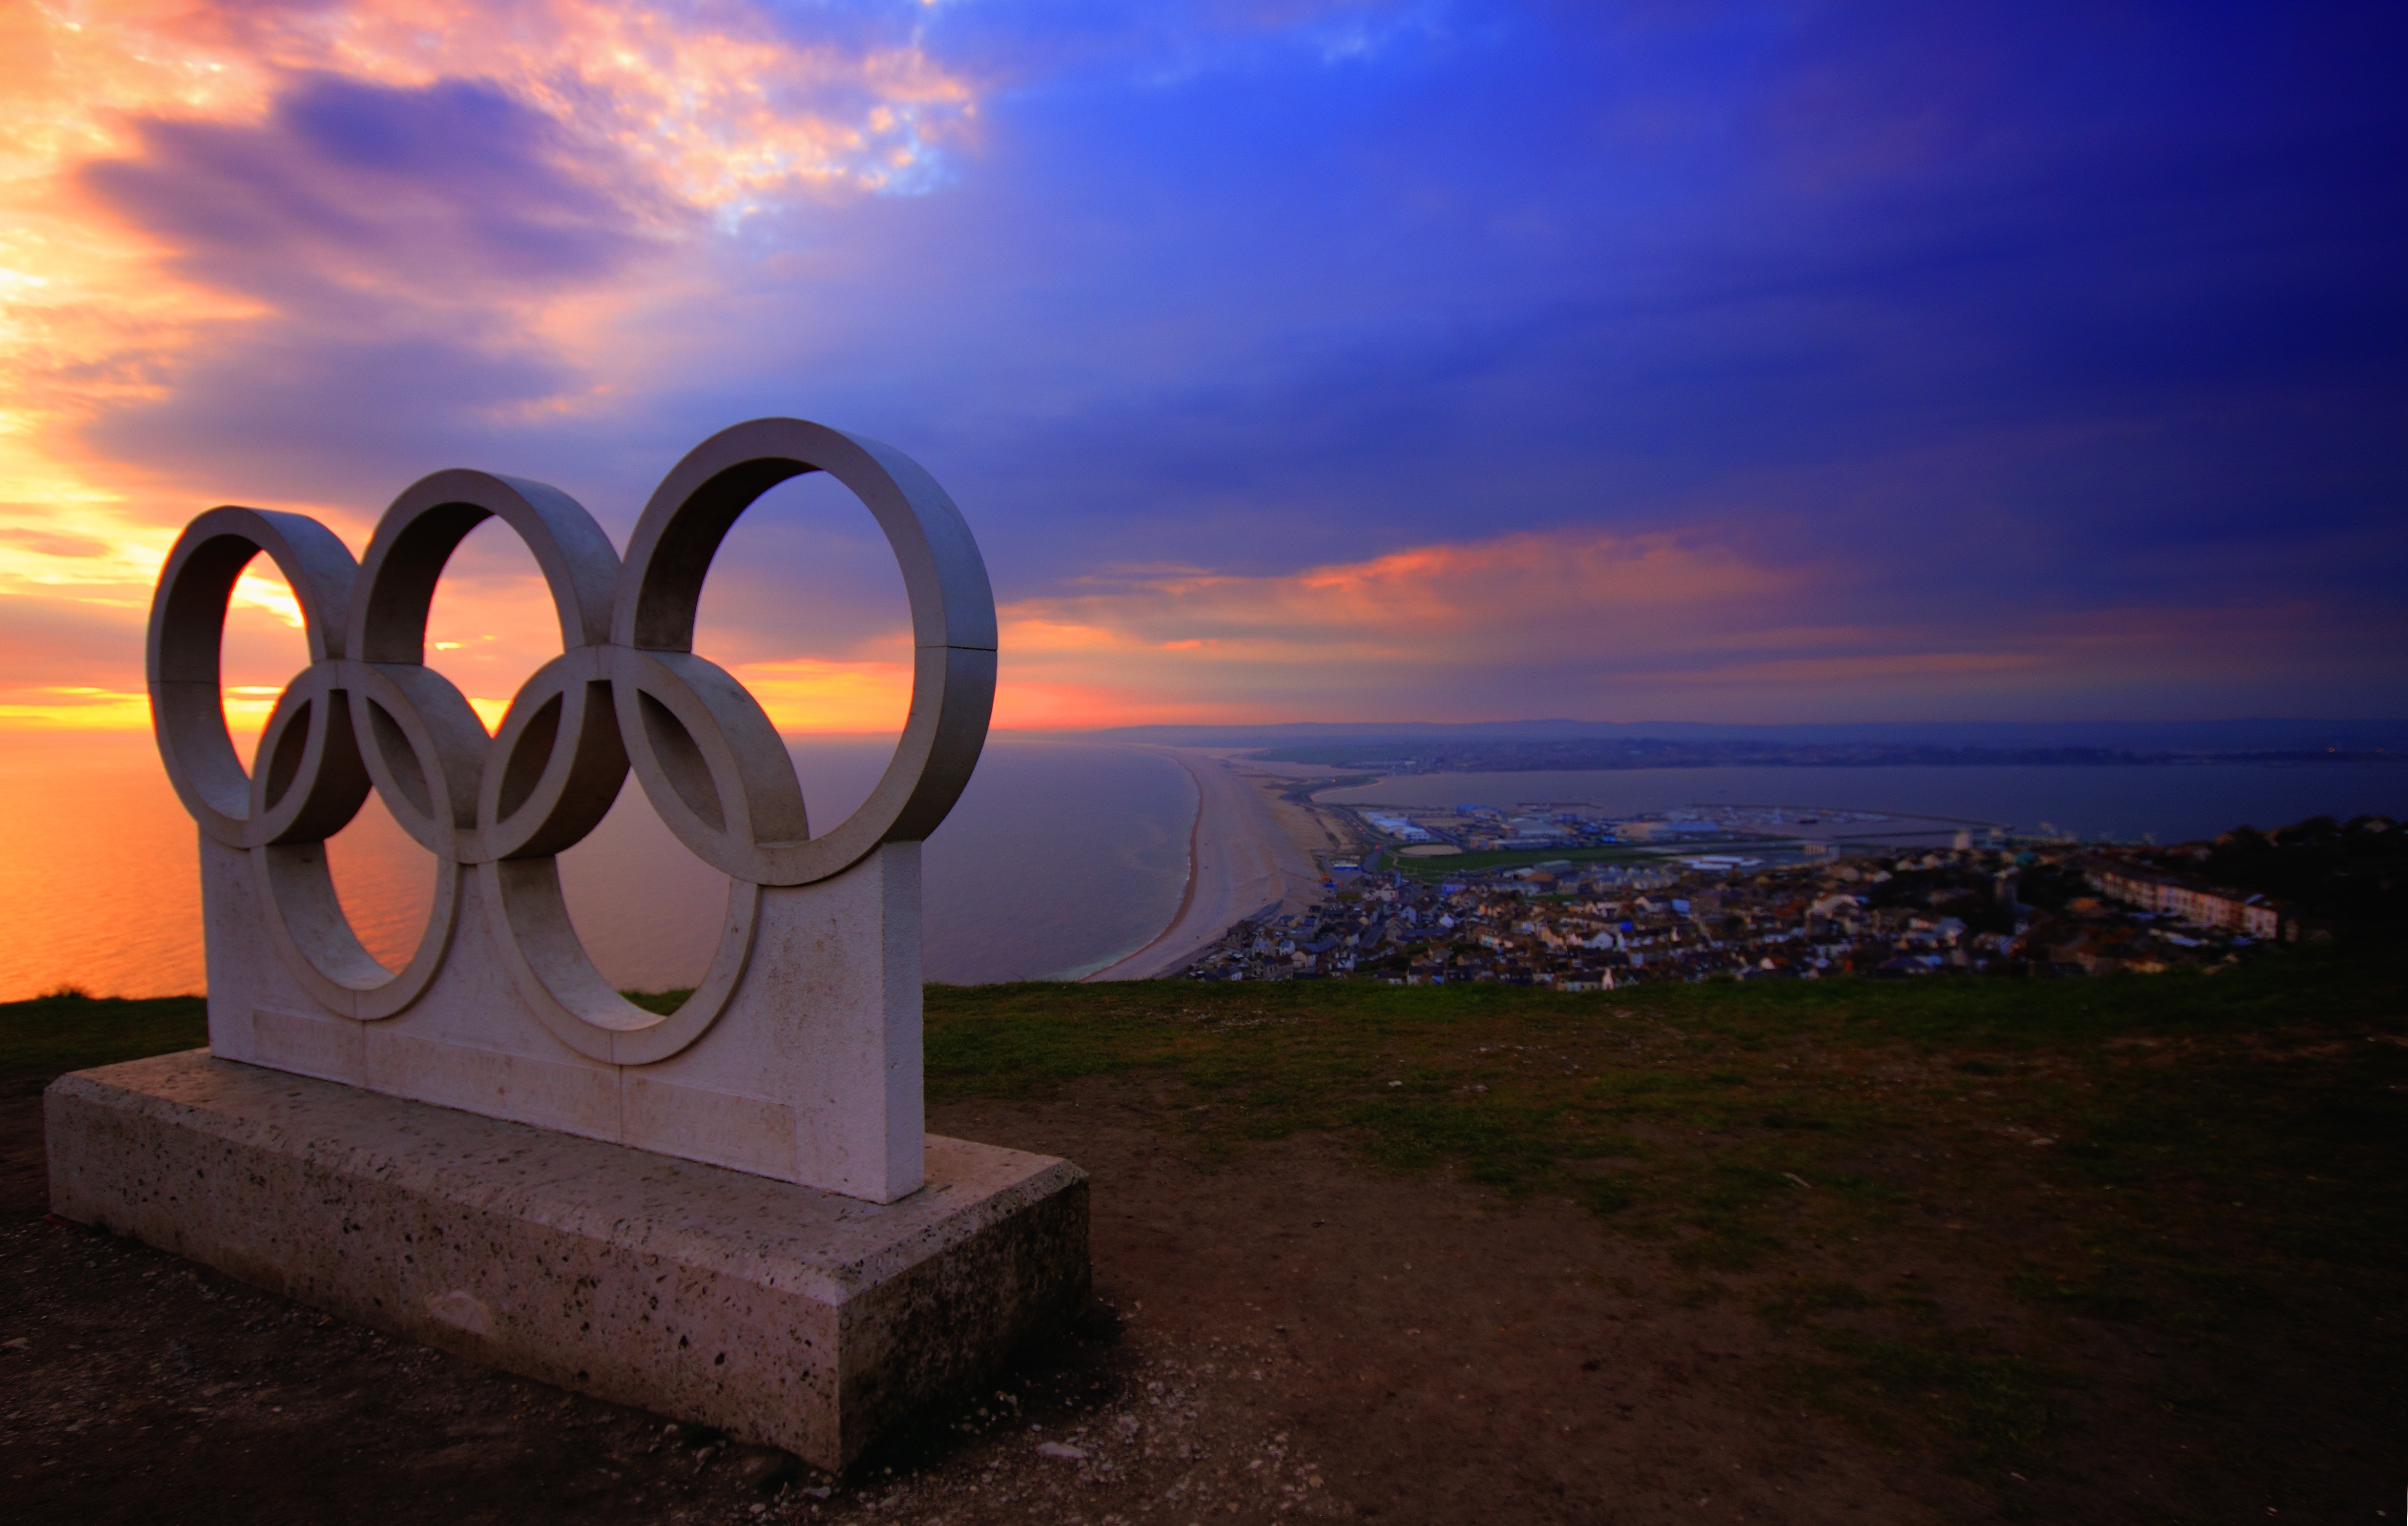 Olympics concrete logo statue on top of mountain